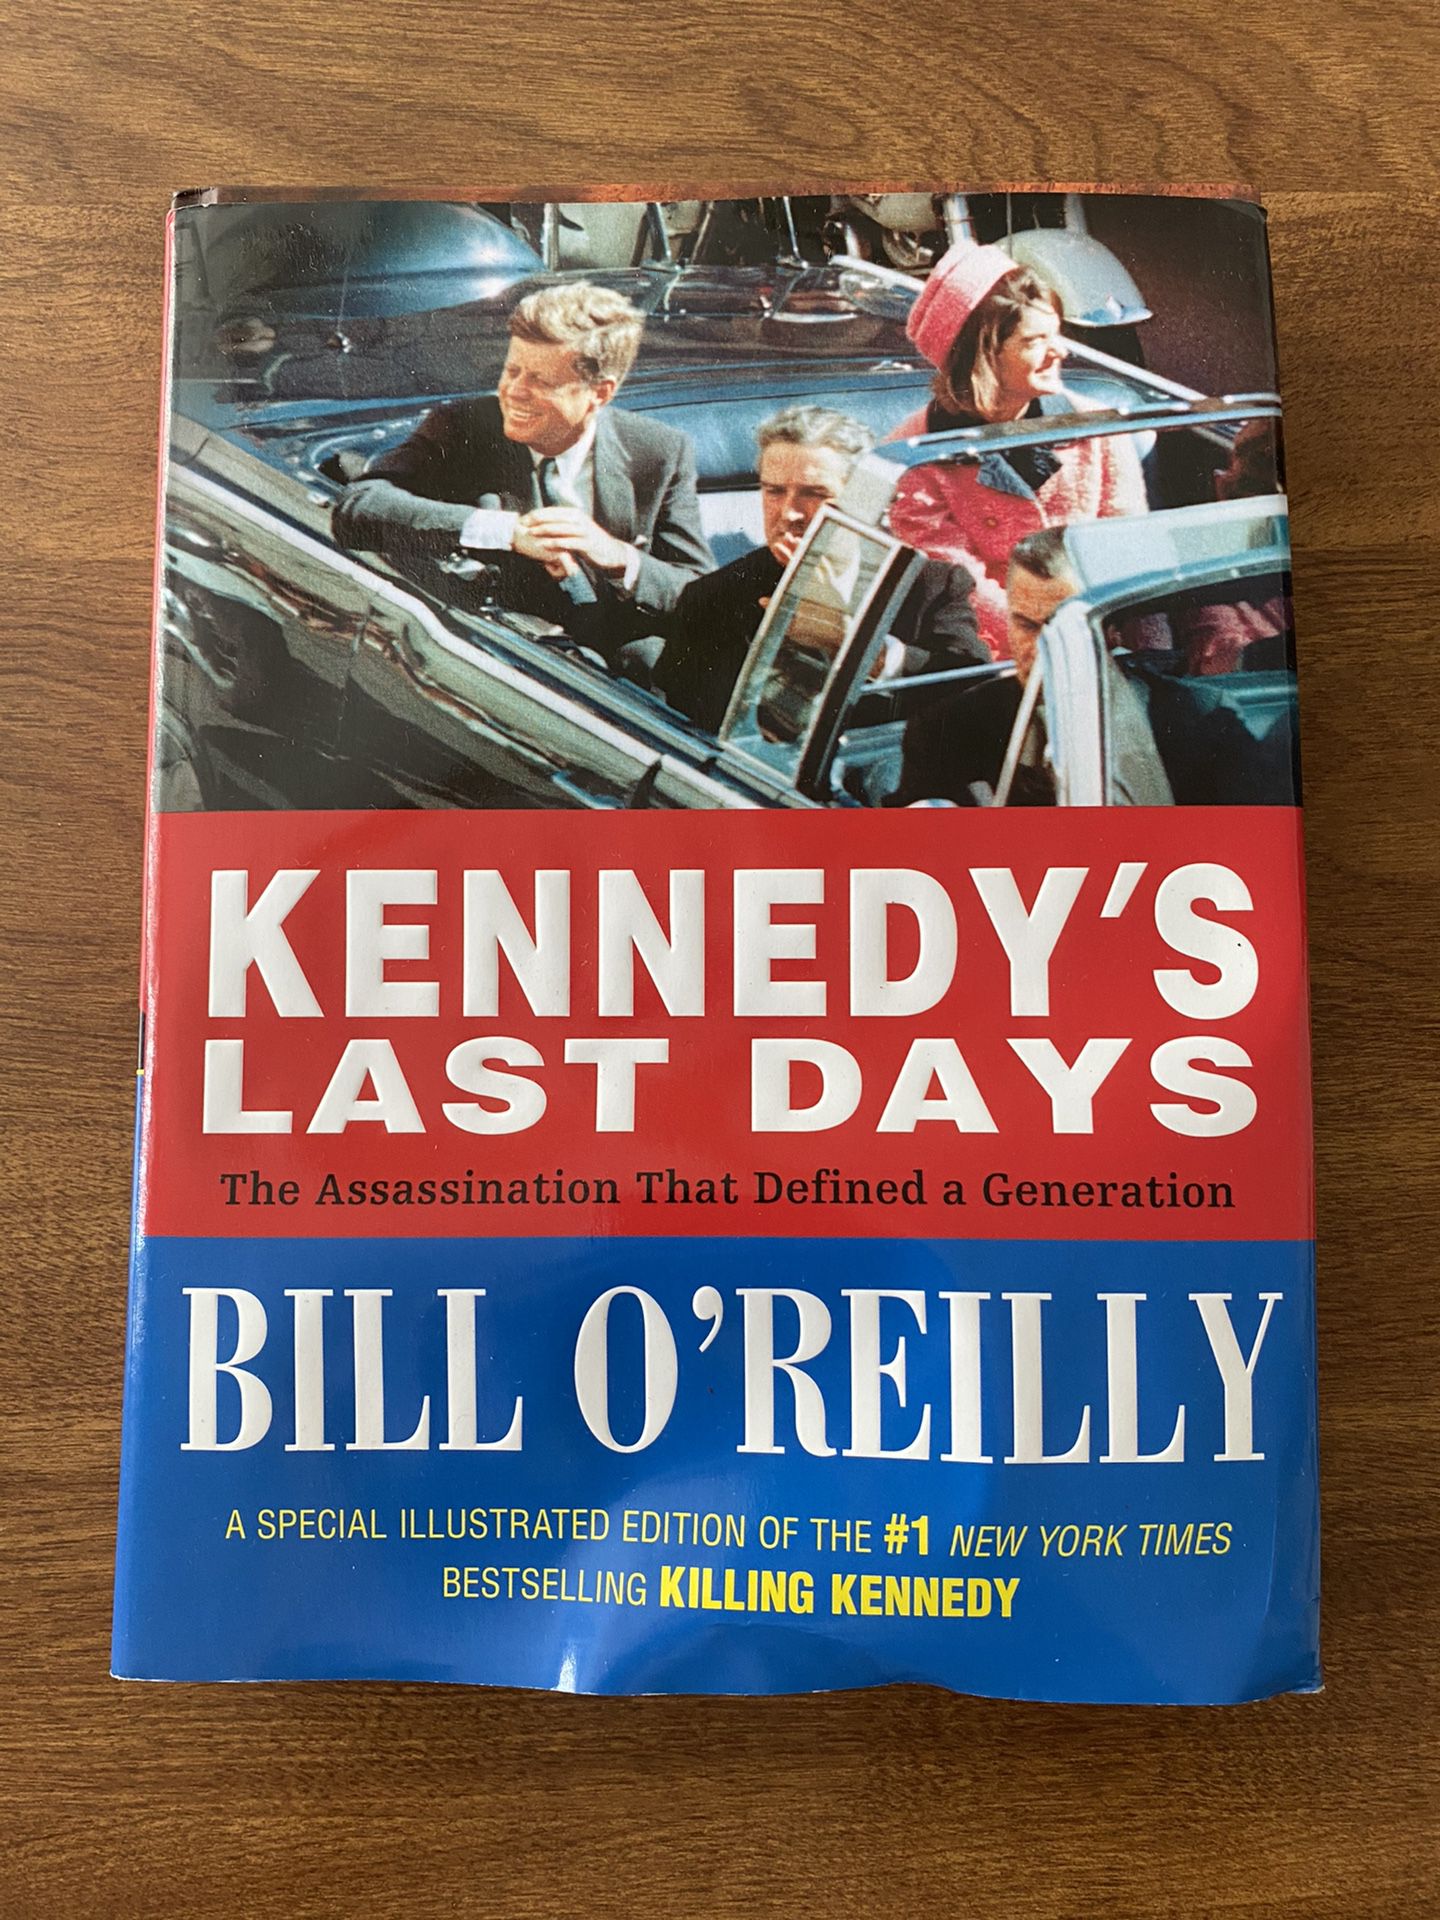 Kennedy’s Last Days by Bill O’Reilly